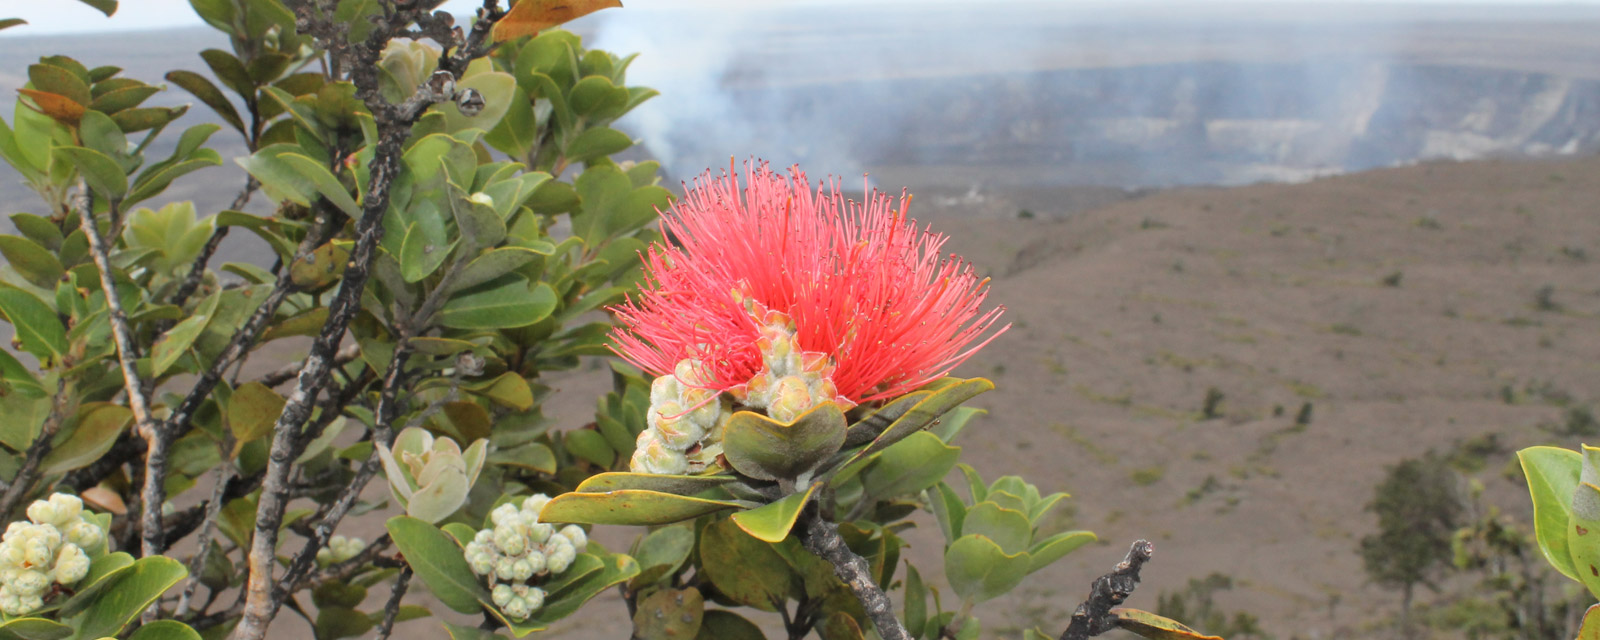 Banner photo showing a Hawaiian flower